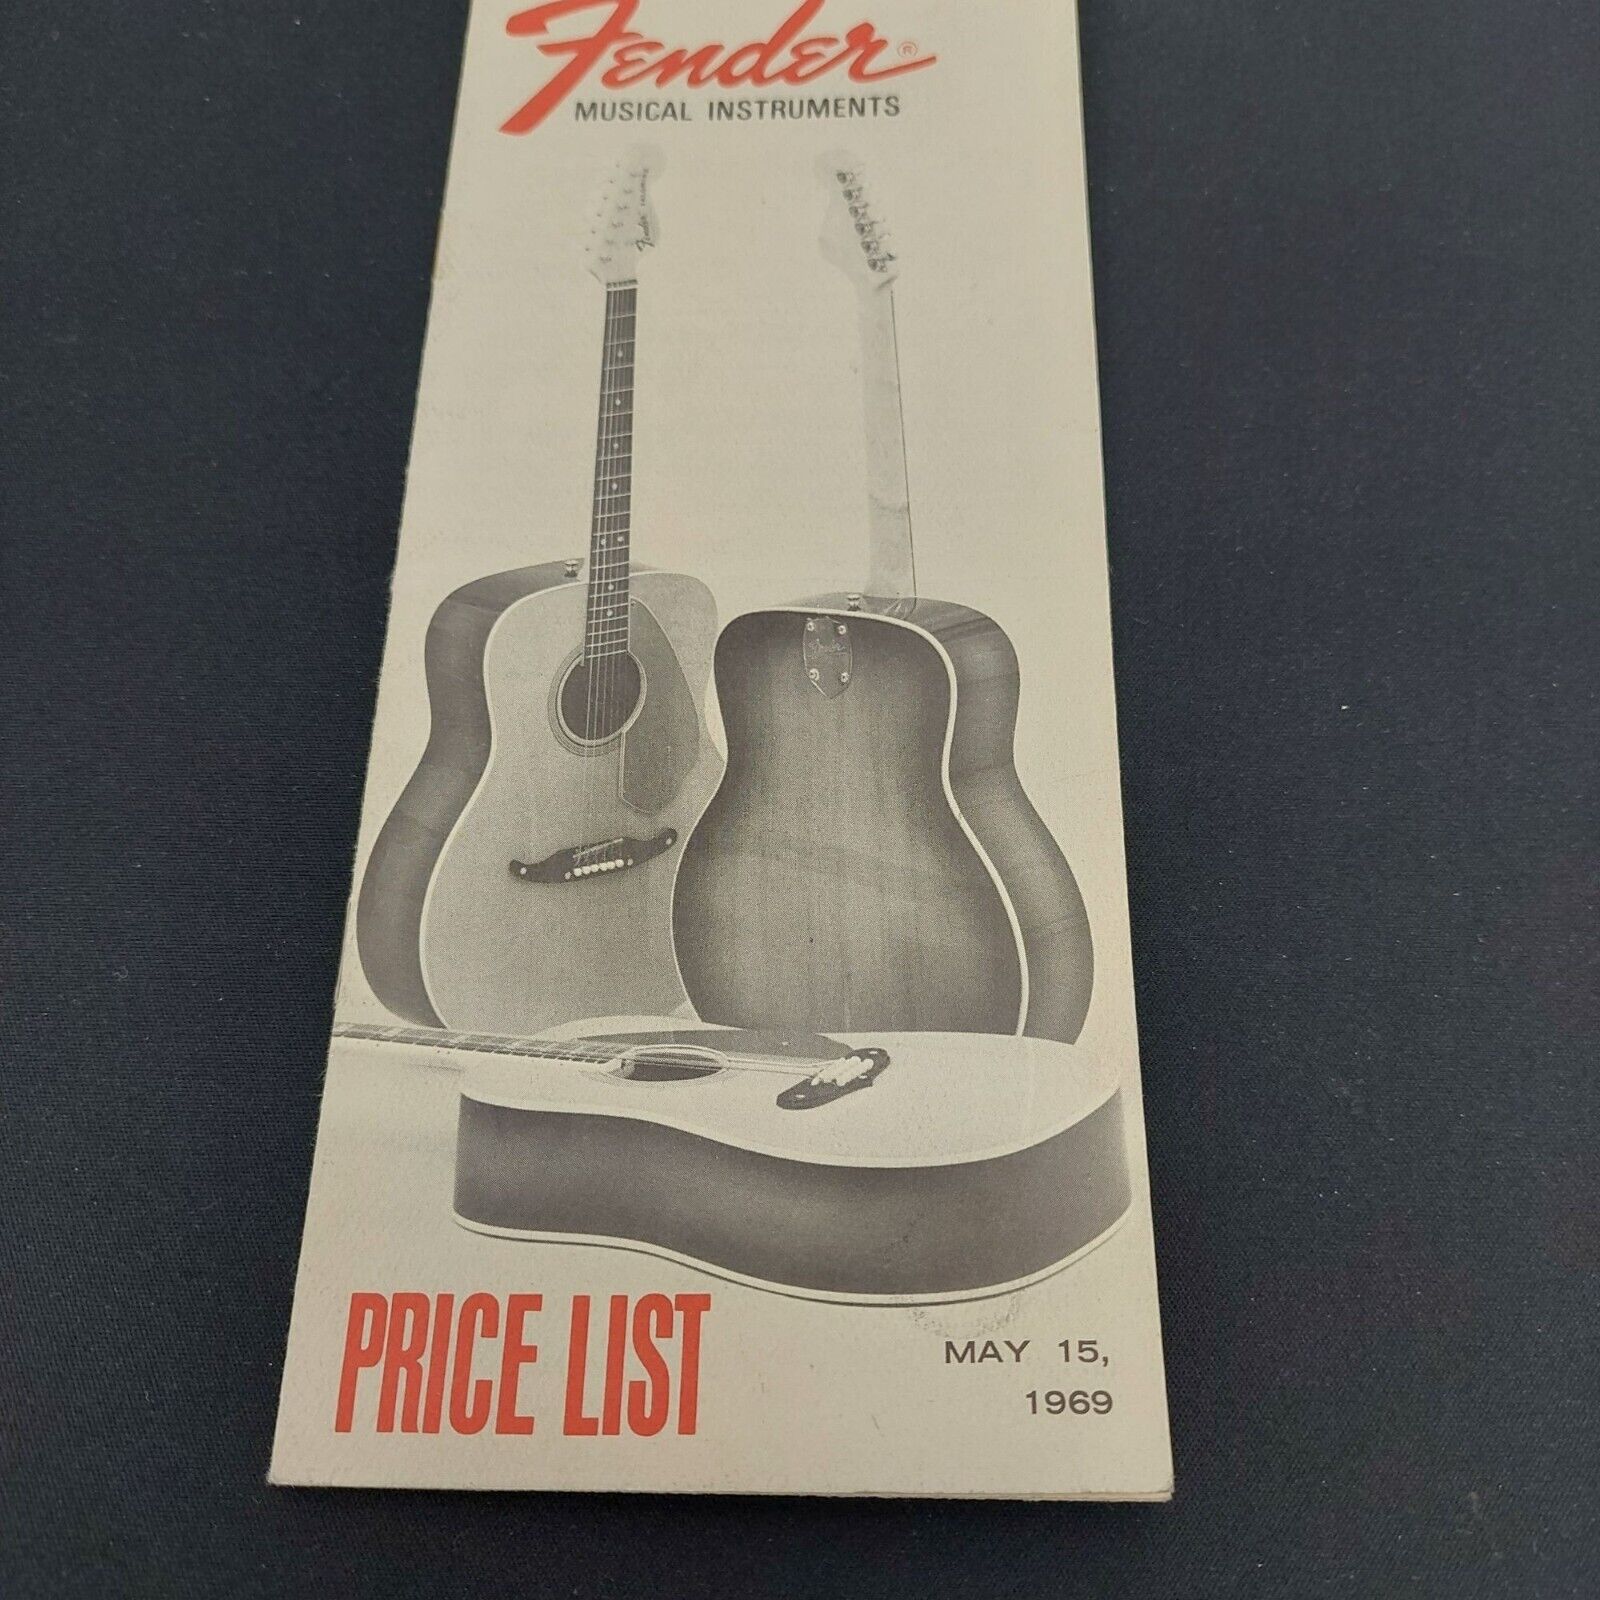 VTG 1969 Fender Instruments Price List Brochure Jazzmaster, Telecaster, Strat